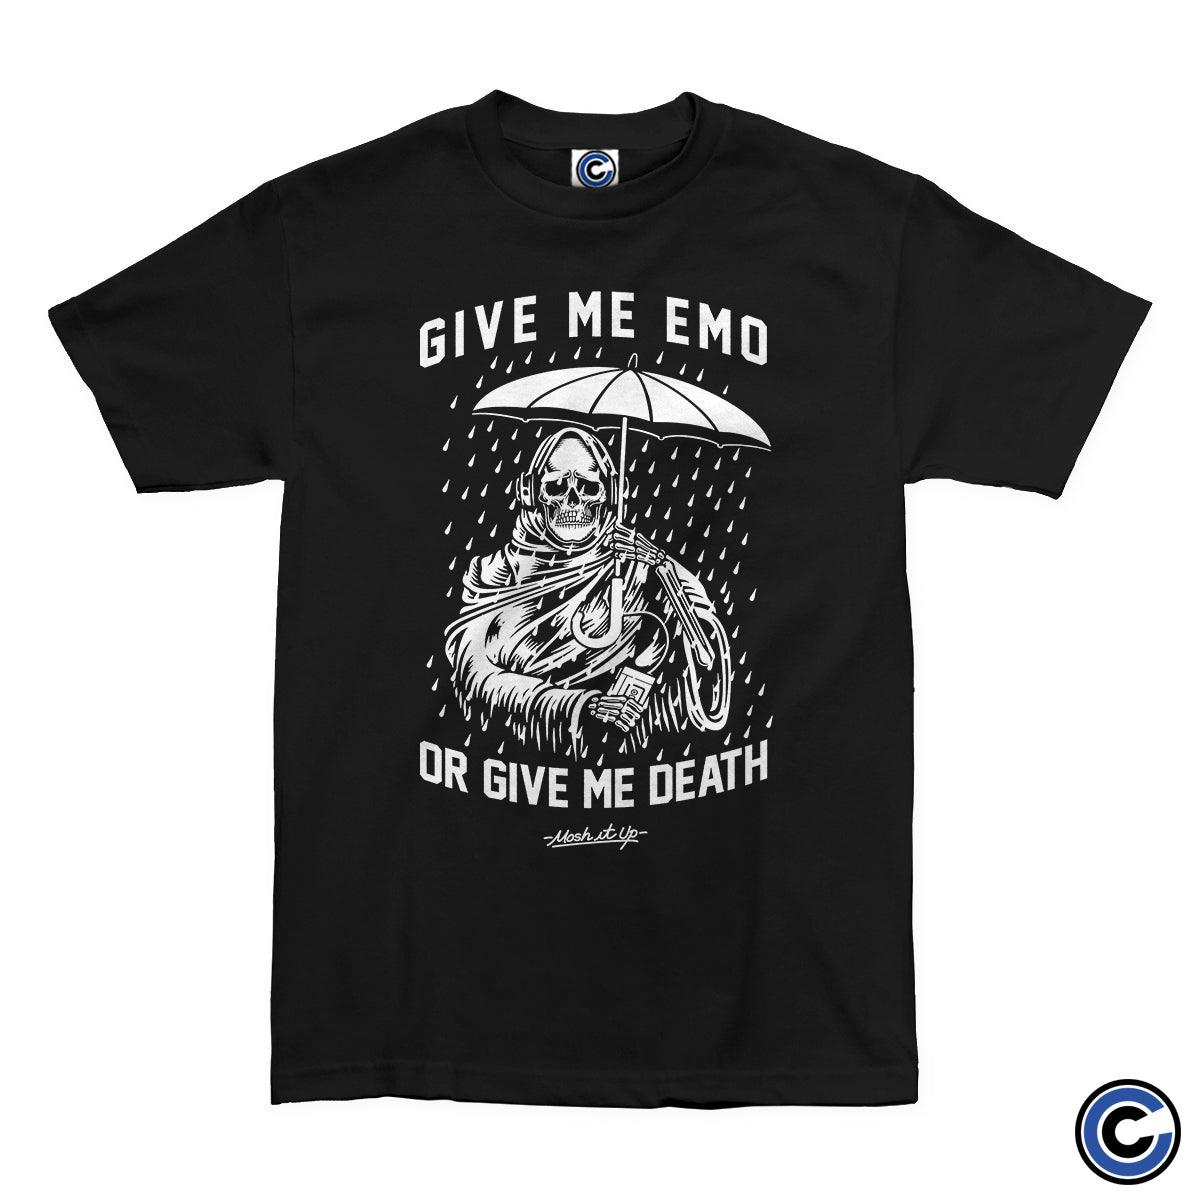 Mosh It Up "Give Me Emo" Shirt